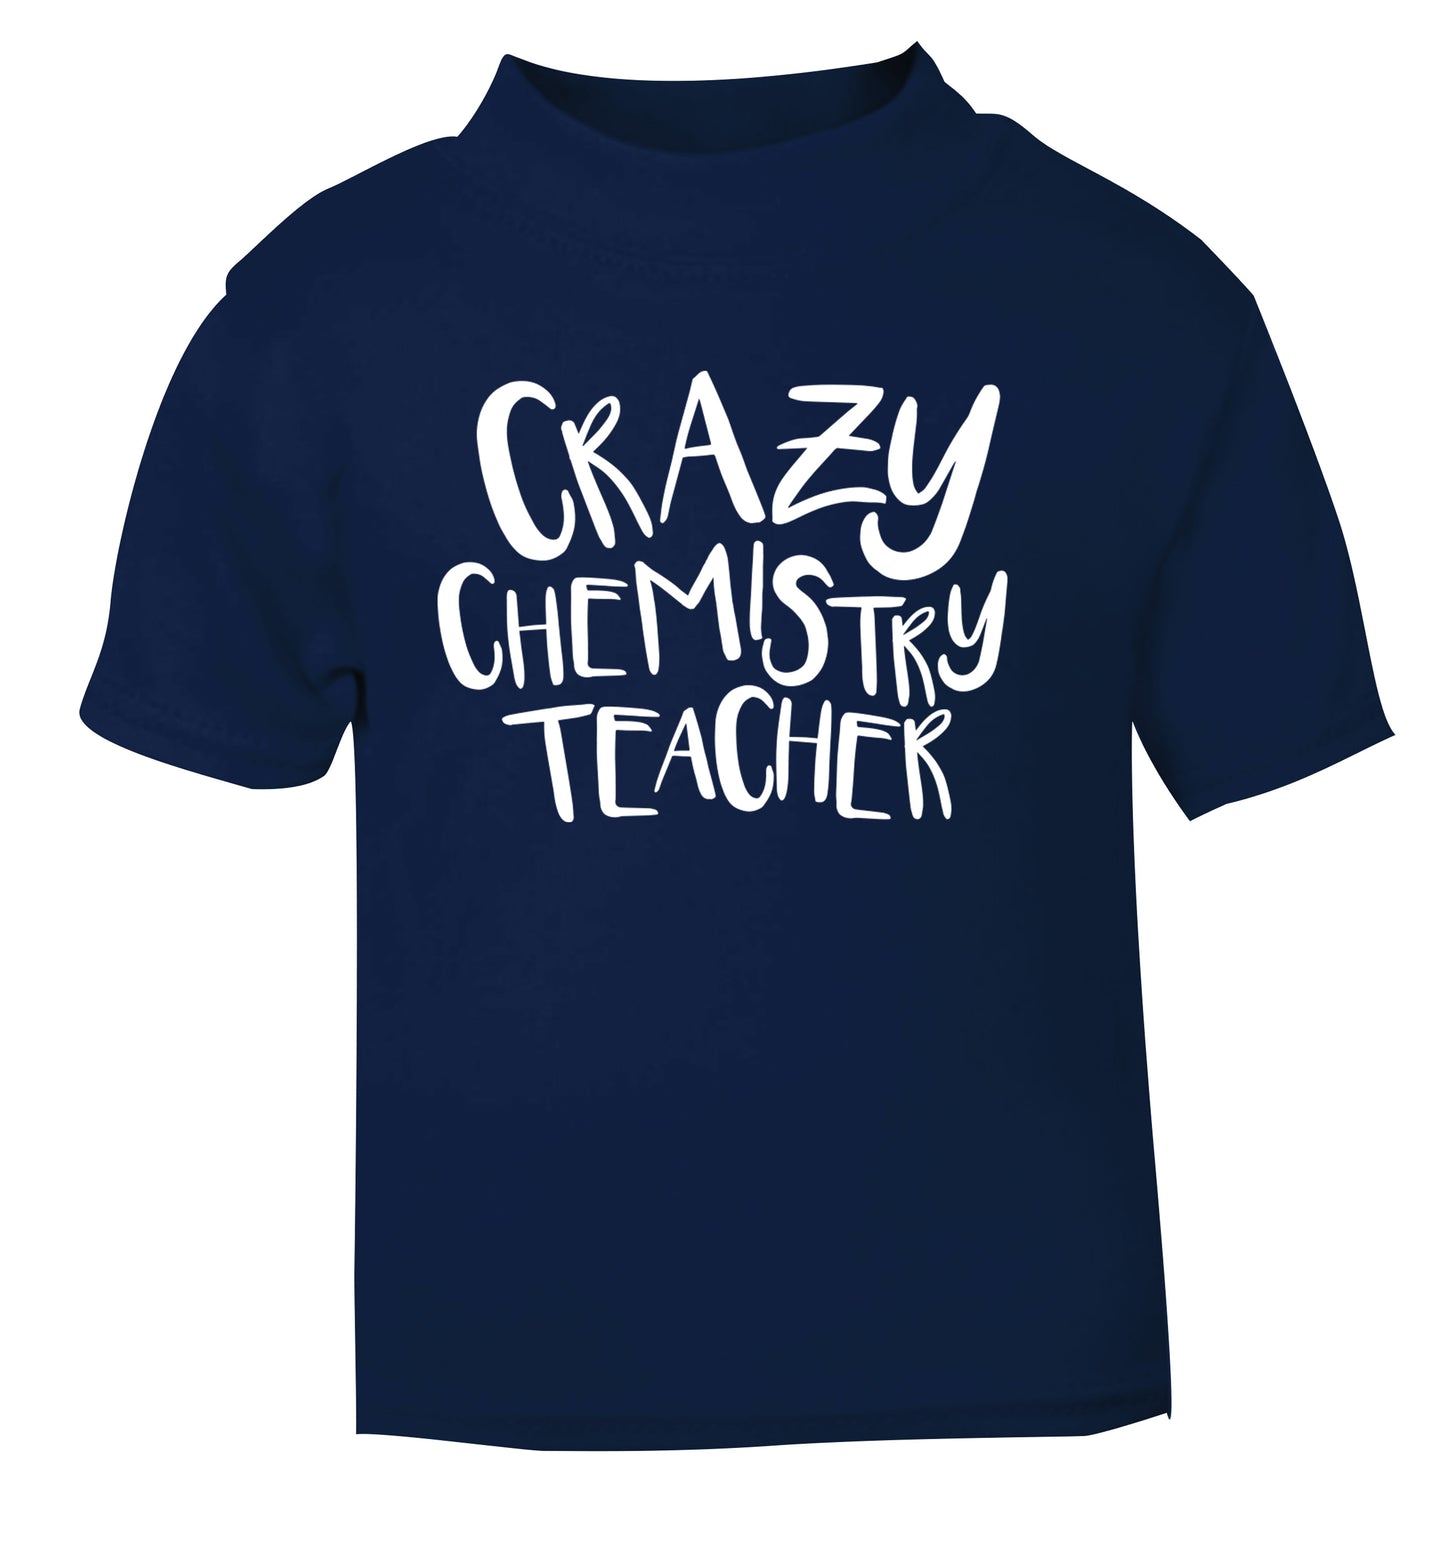 Crazy chemistry teacher navy Baby Toddler Tshirt 2 Years